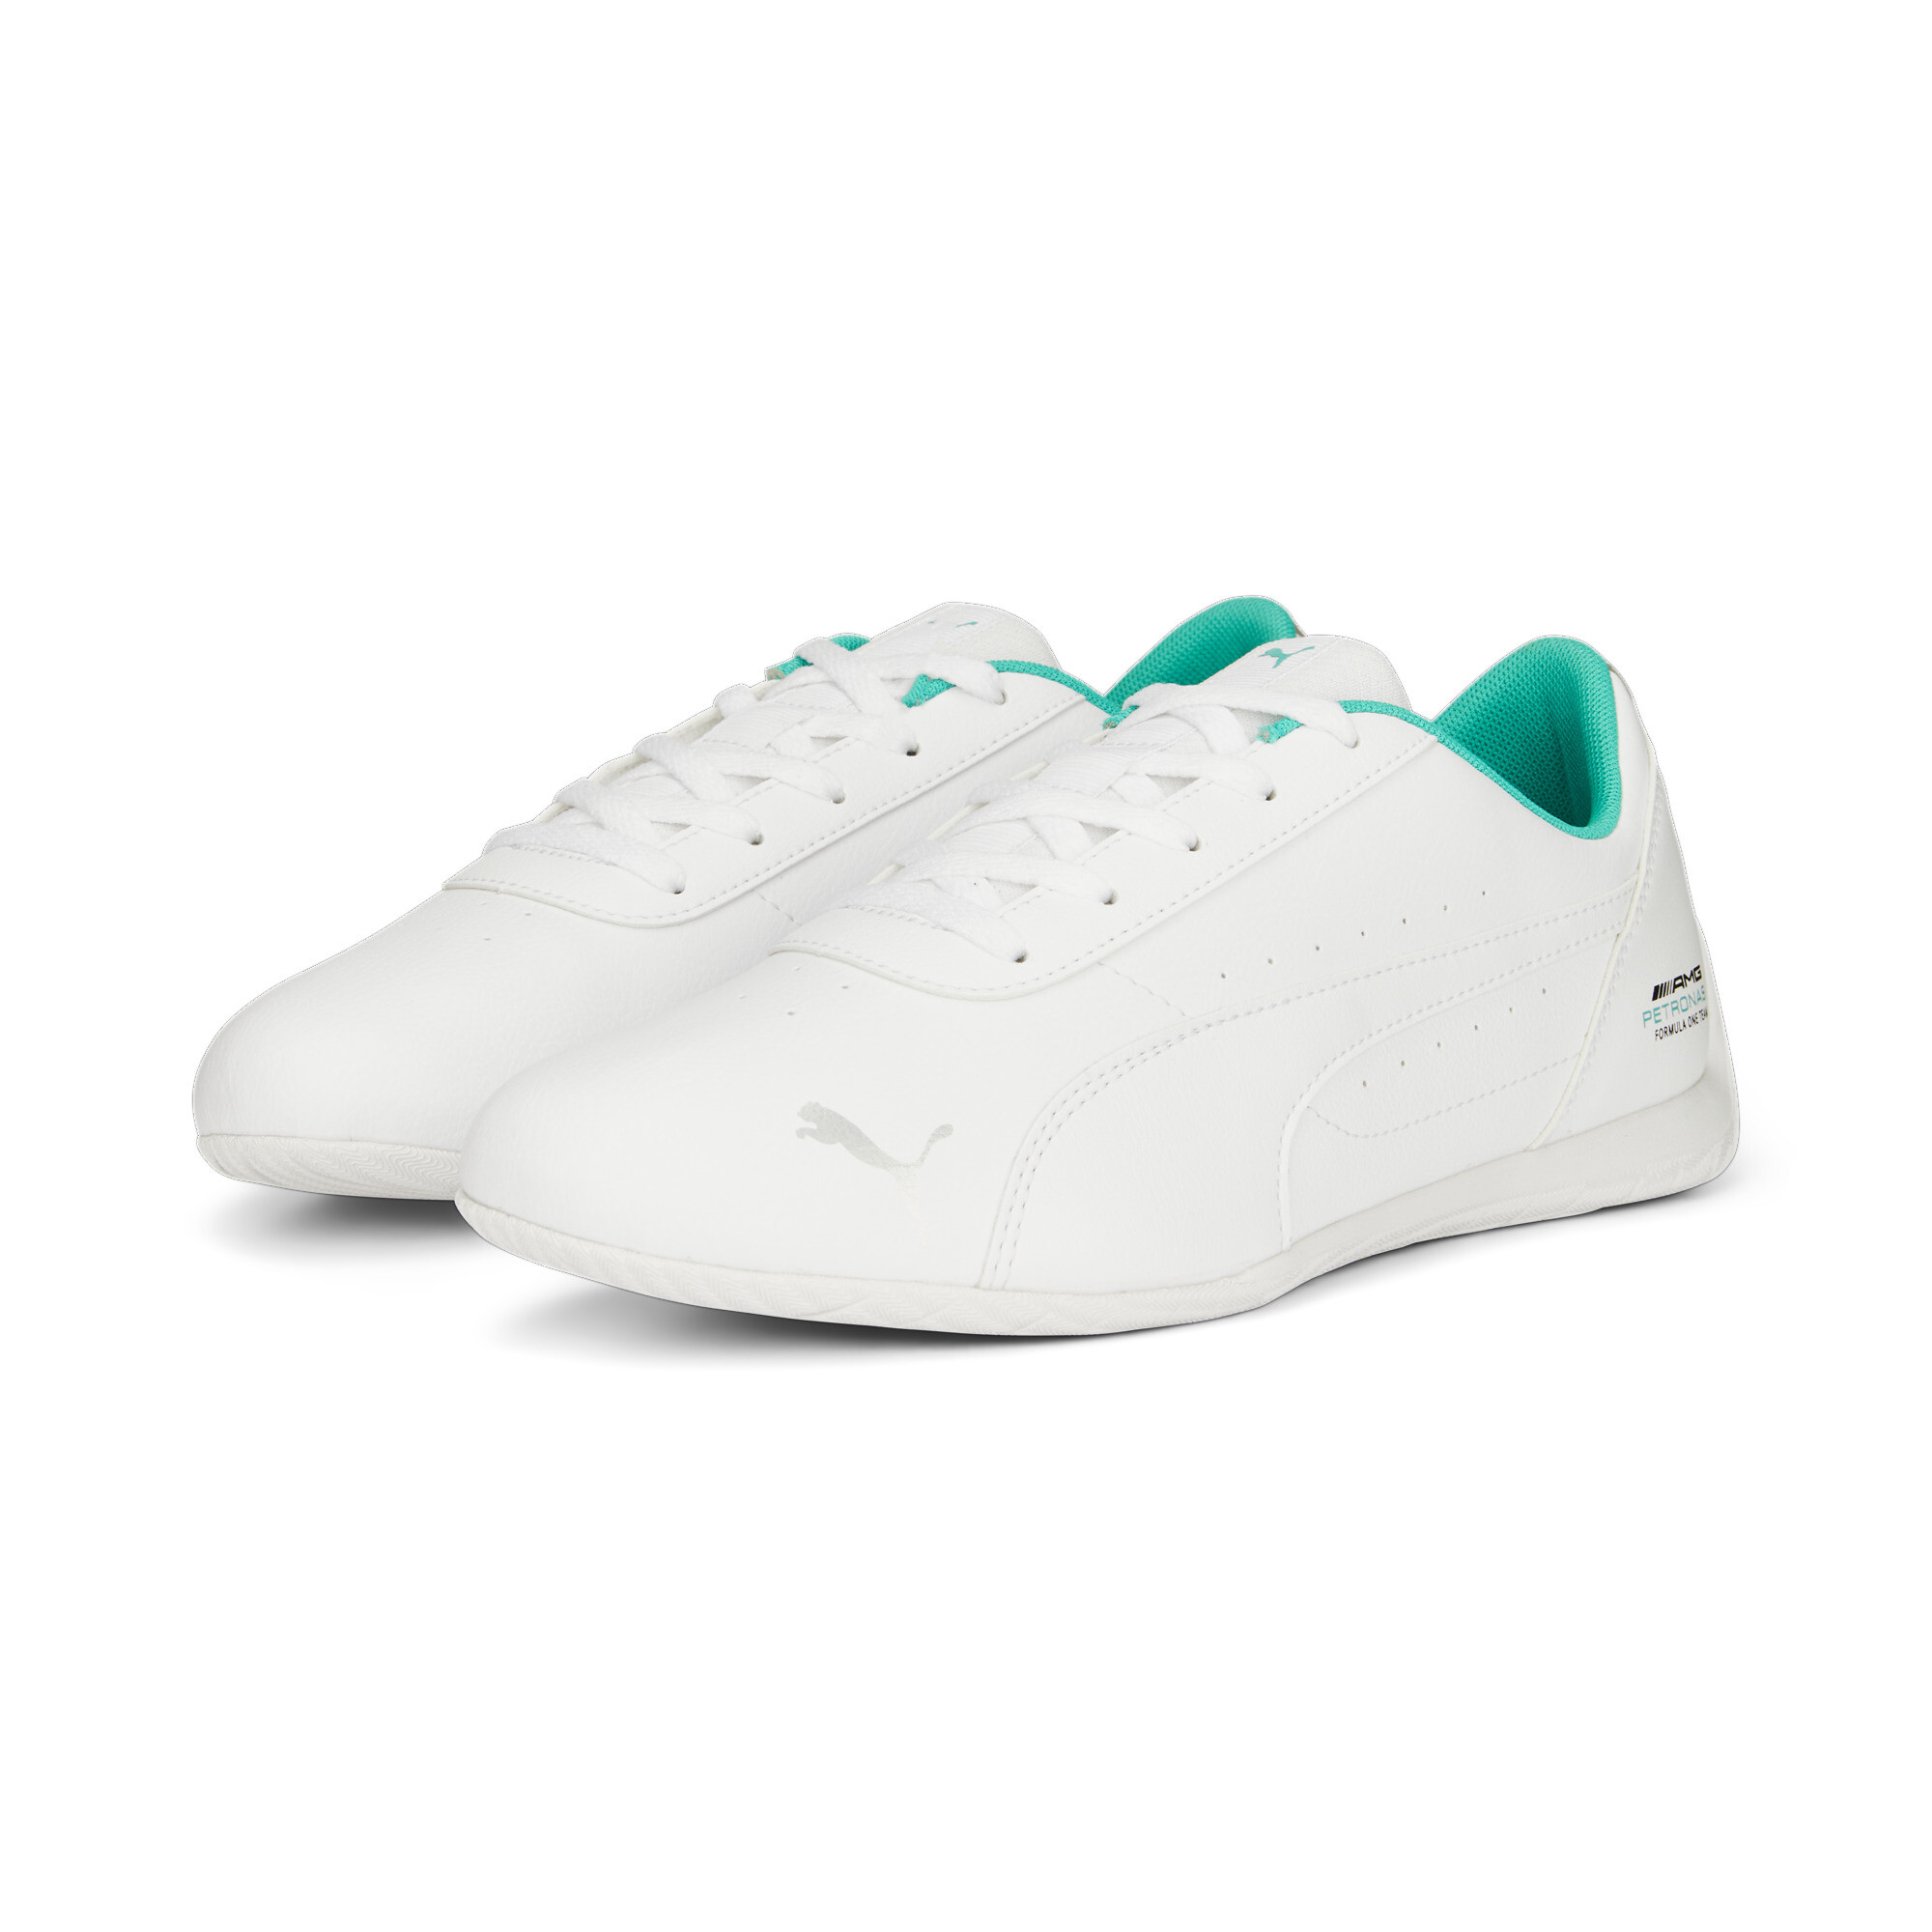 Puma Mercedes F1 Neo Cat Motorsport Shoes, White, Size 35.5, Shoes